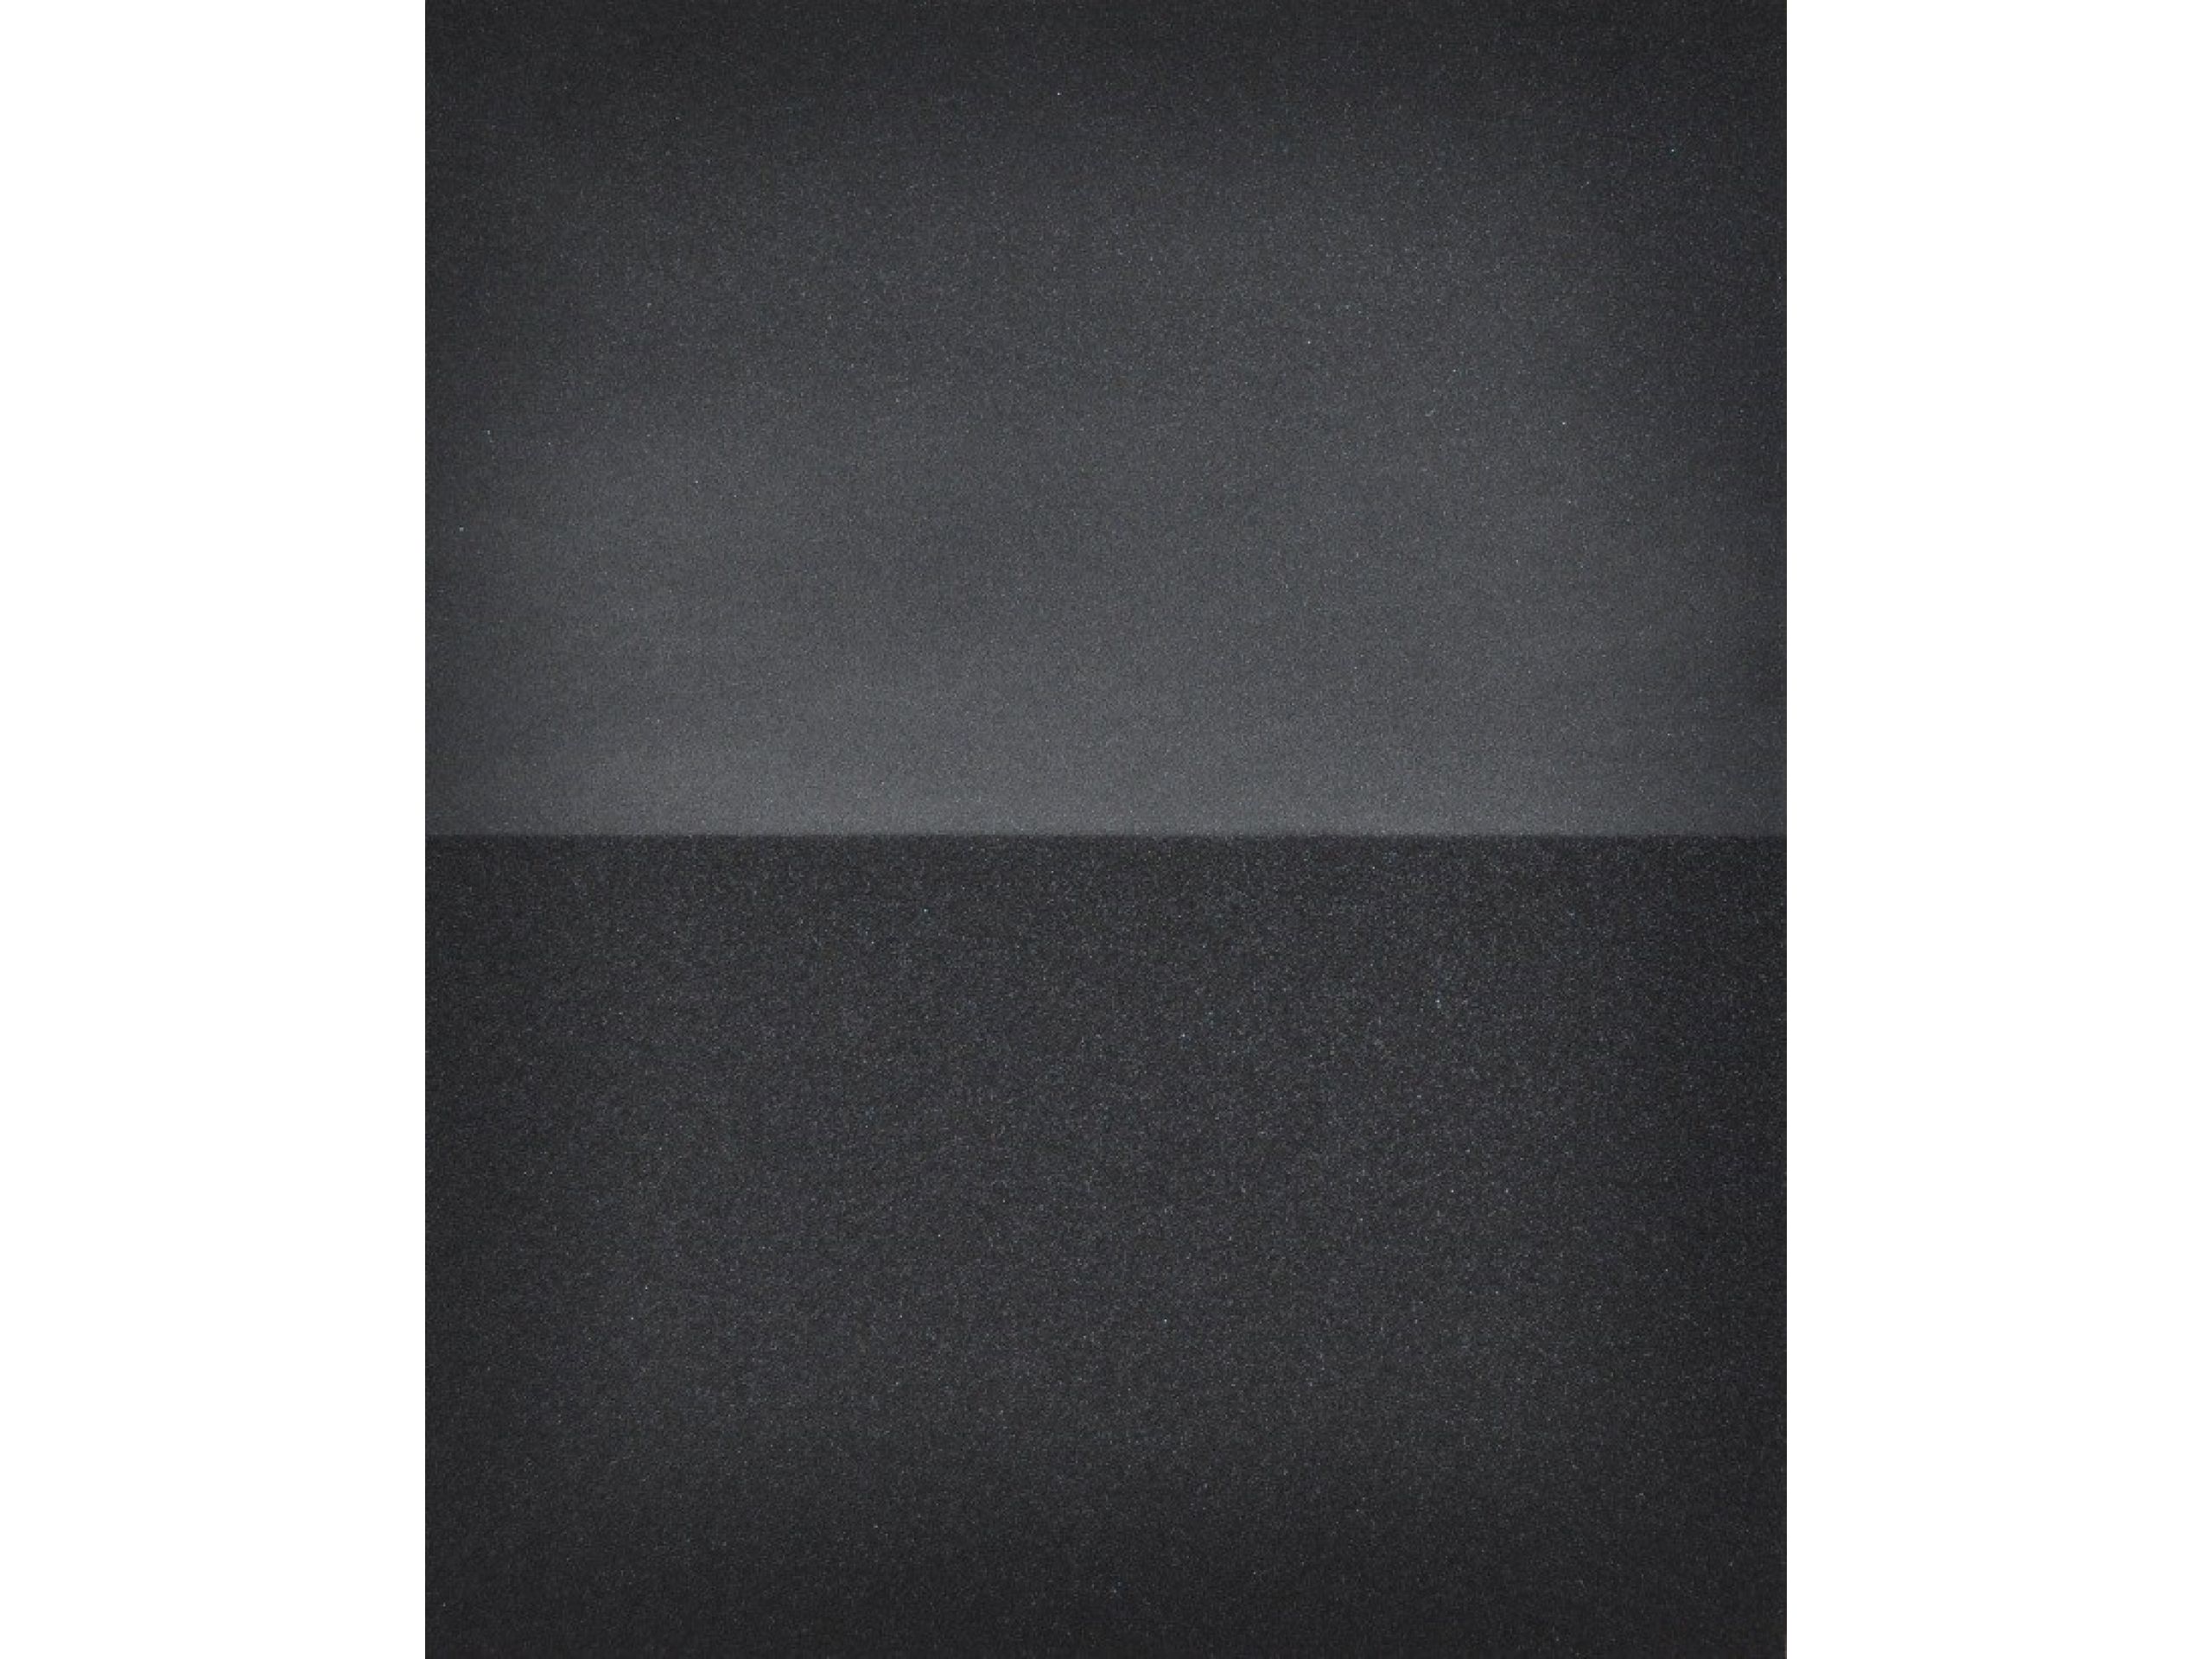 Gerhard Langenfeld, 'Horizont', 2015, Schleifpapier, gebürstet, 28 x 23 cm, 150 € 